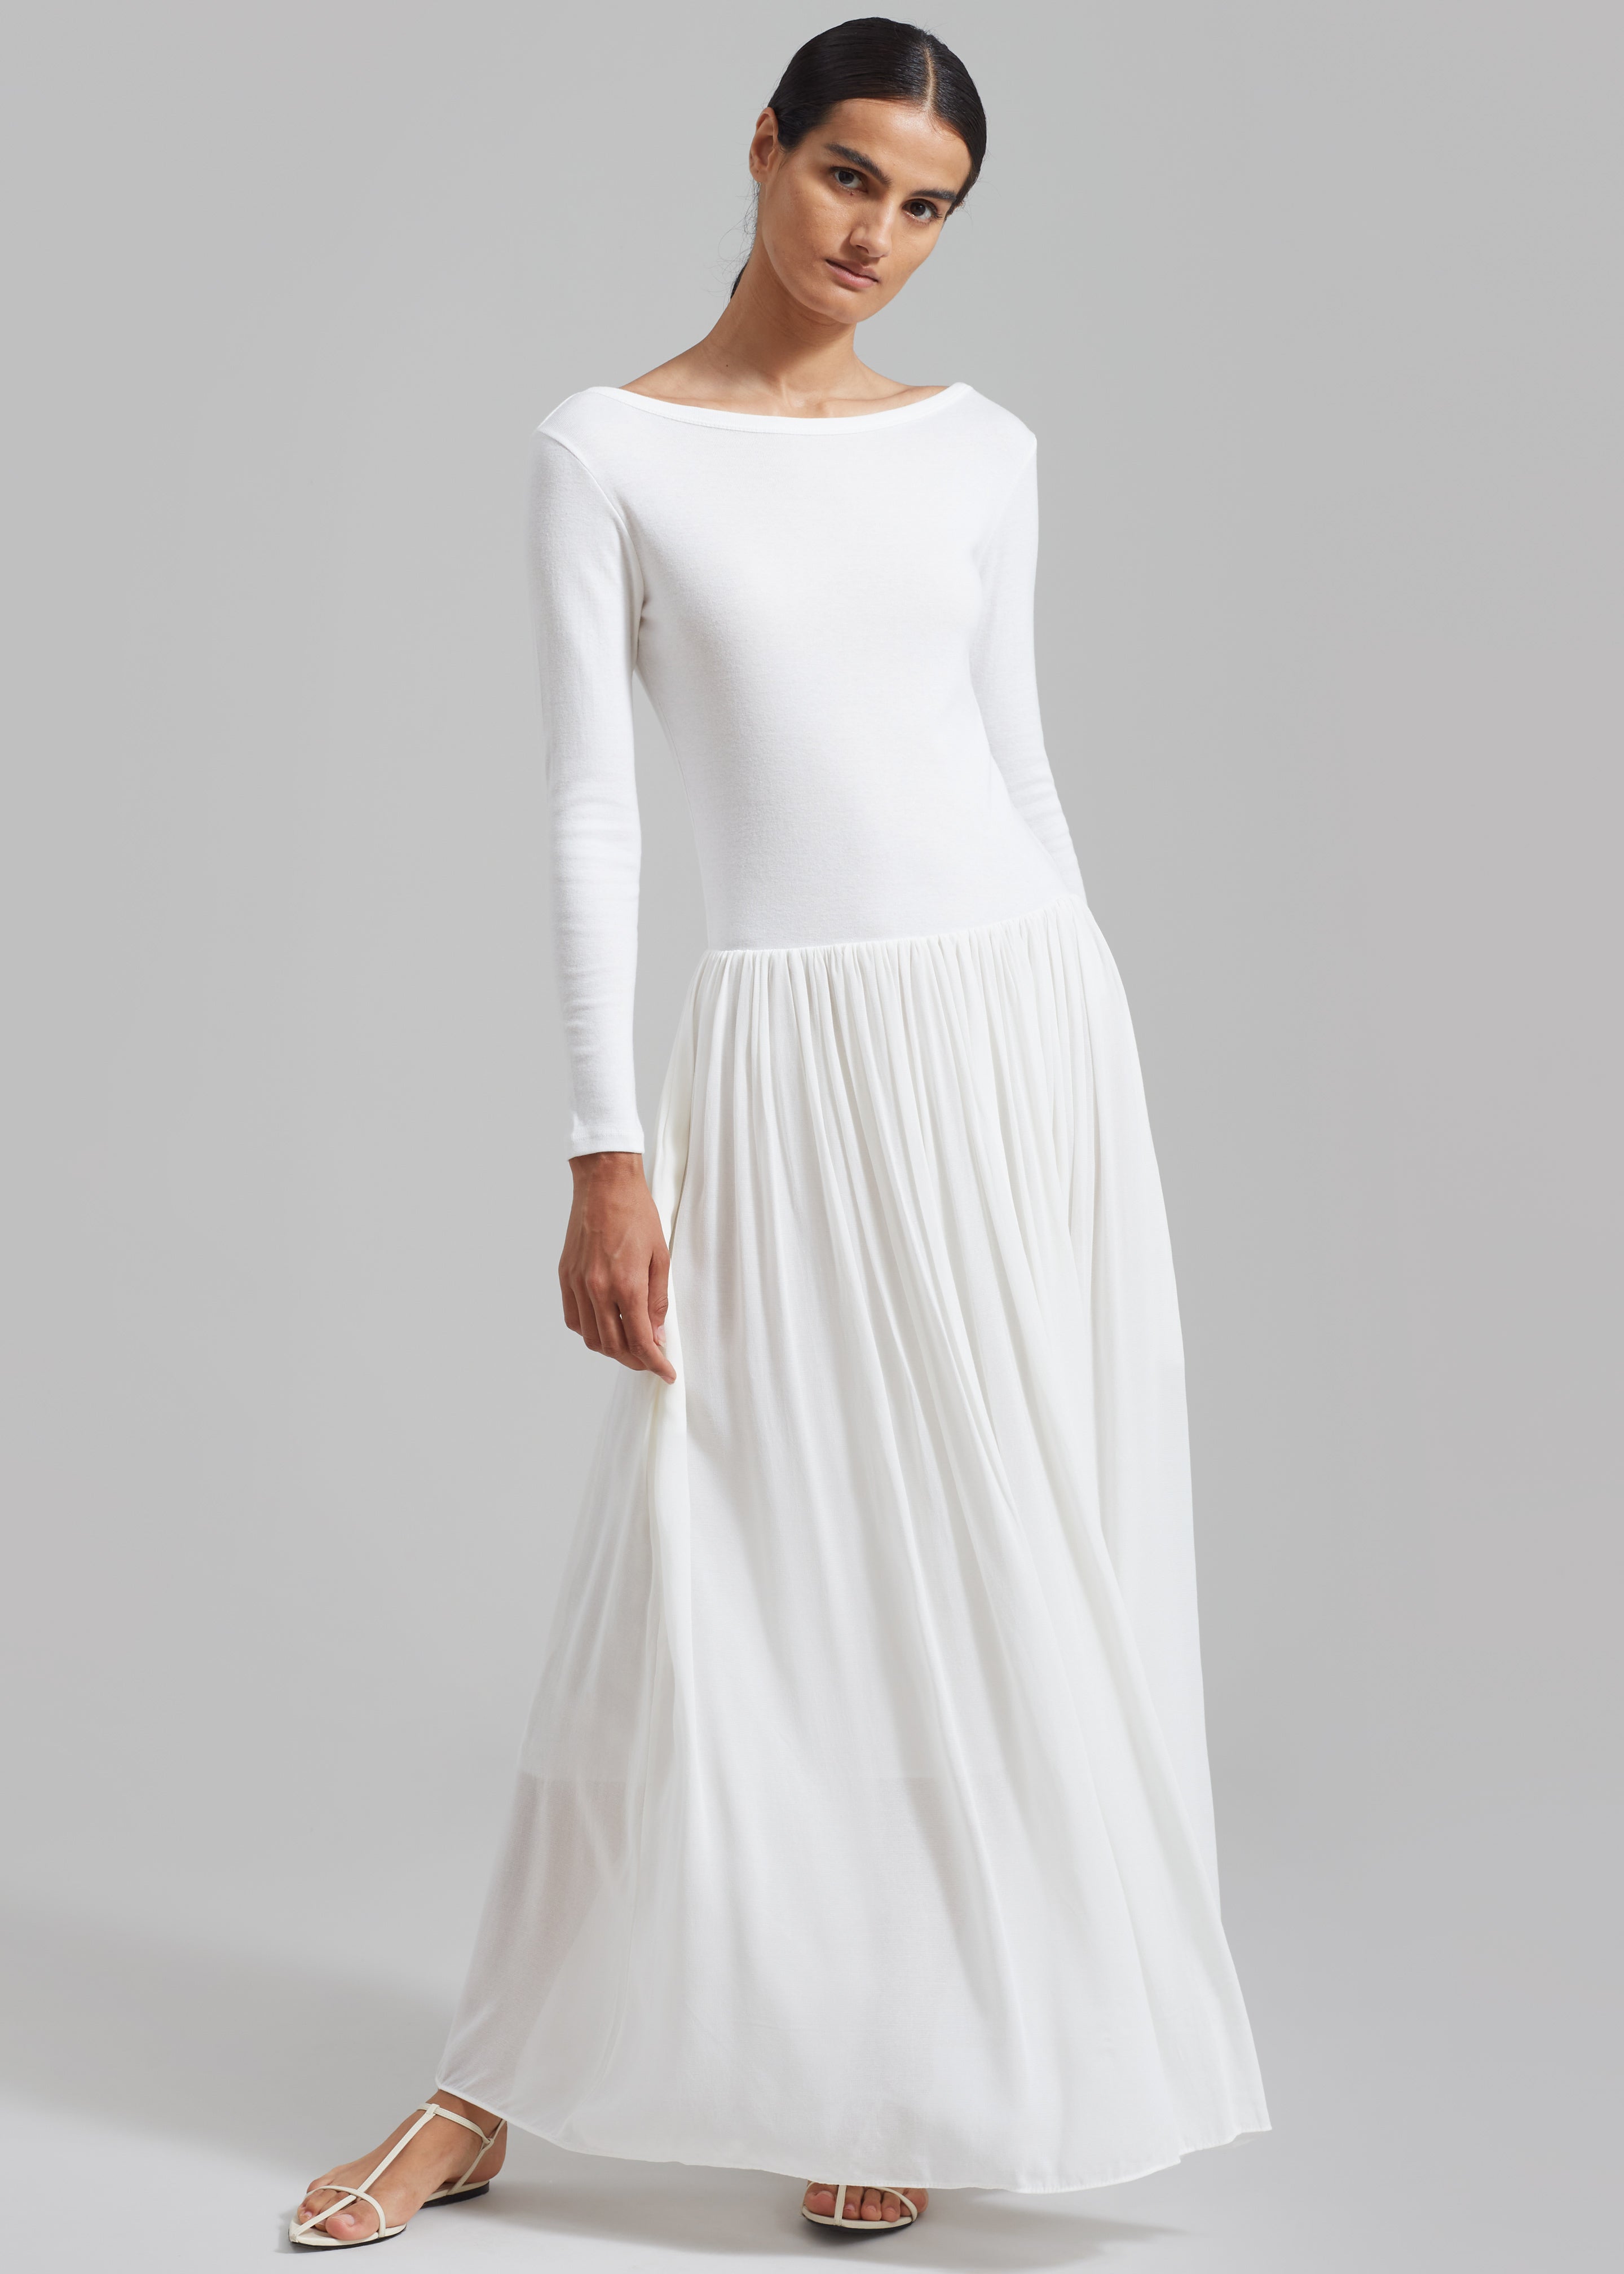 Odette Gathered Skirt Maxi Dress - White - 7